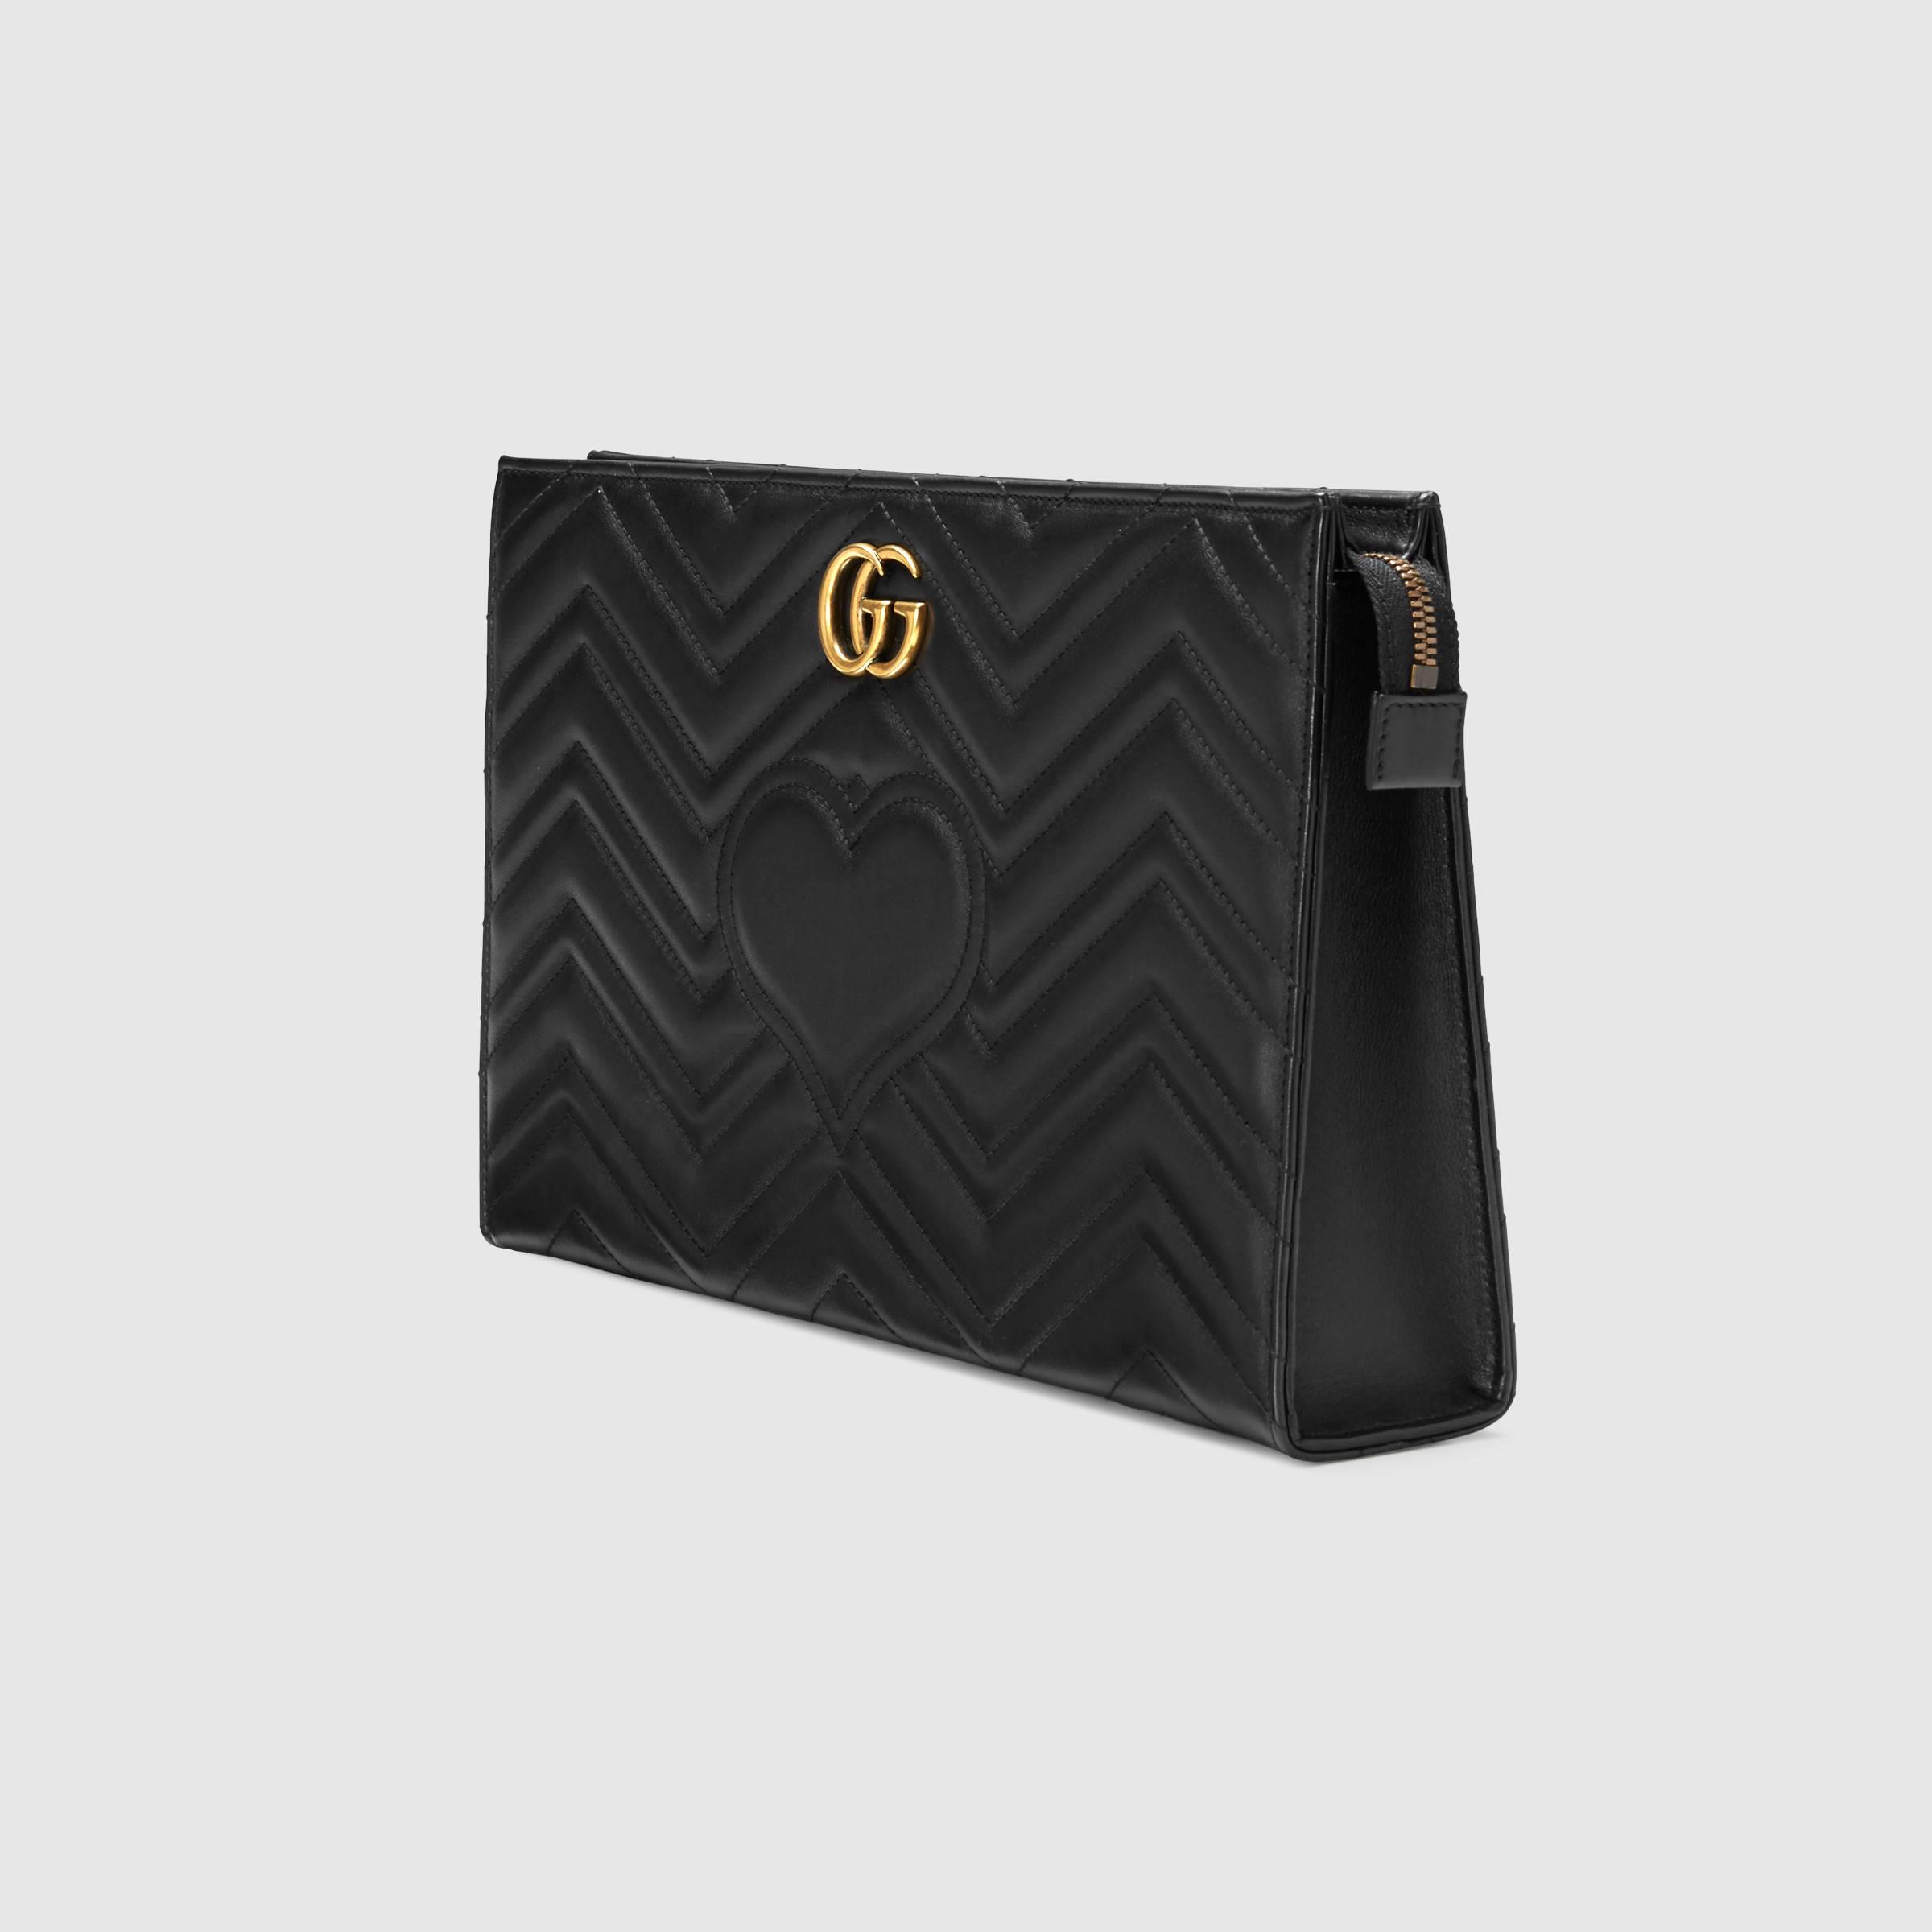 Gucci GG Marmont Matelassé Leather Clutch in Black | Lyst